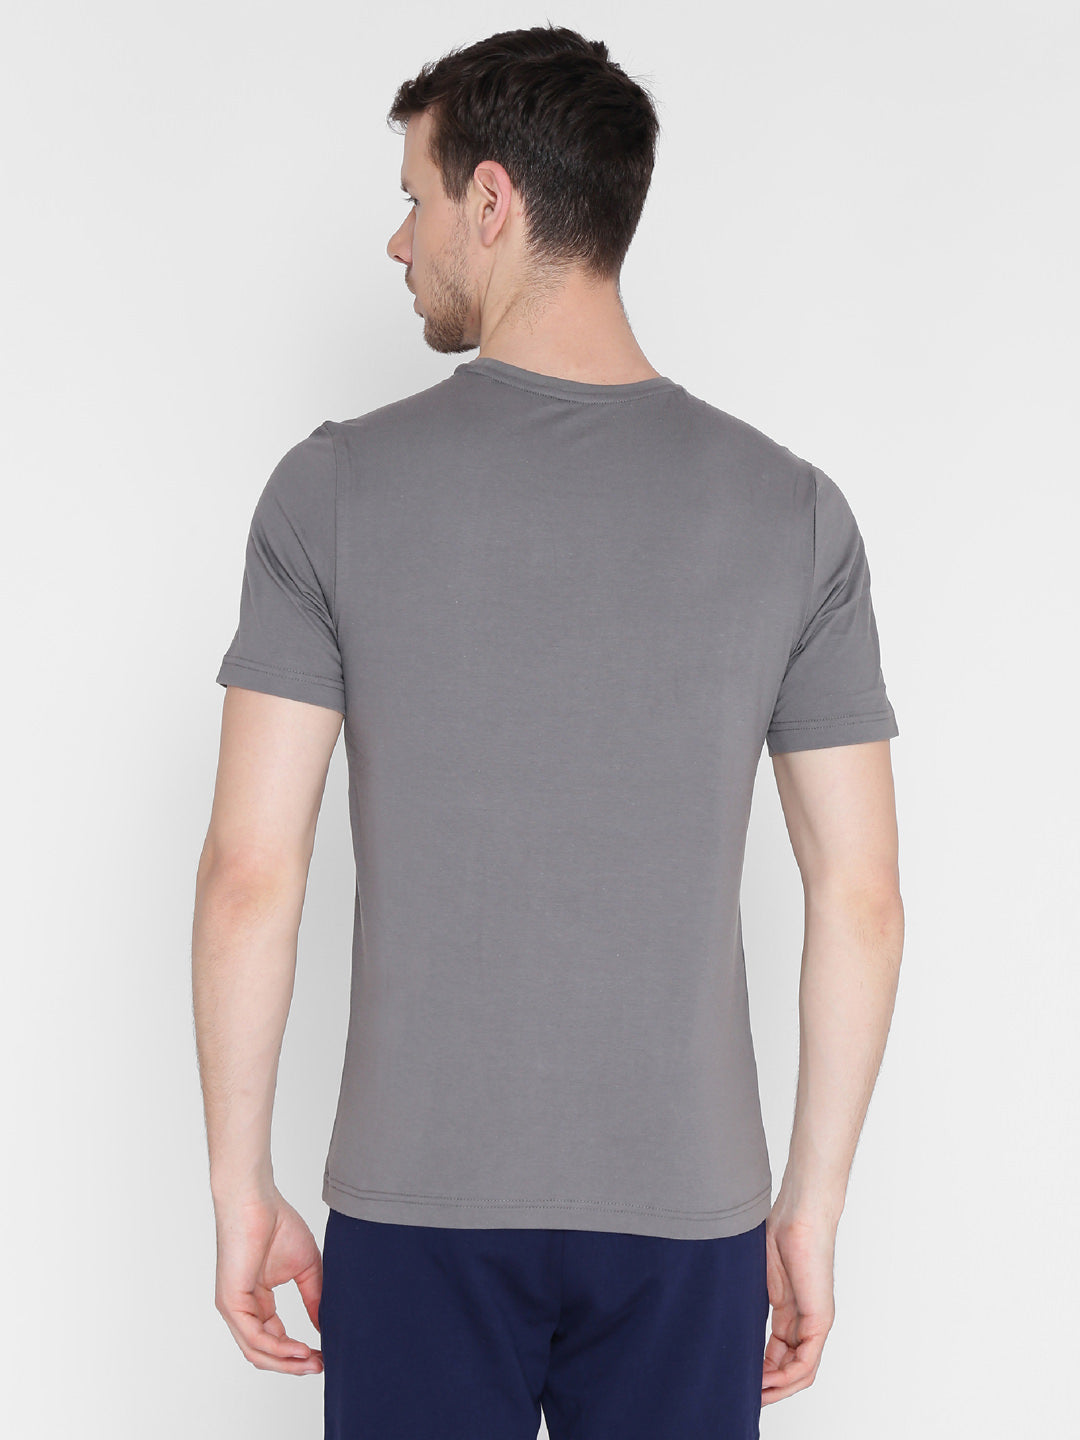 Alcis Men Printed Grey Tshirts